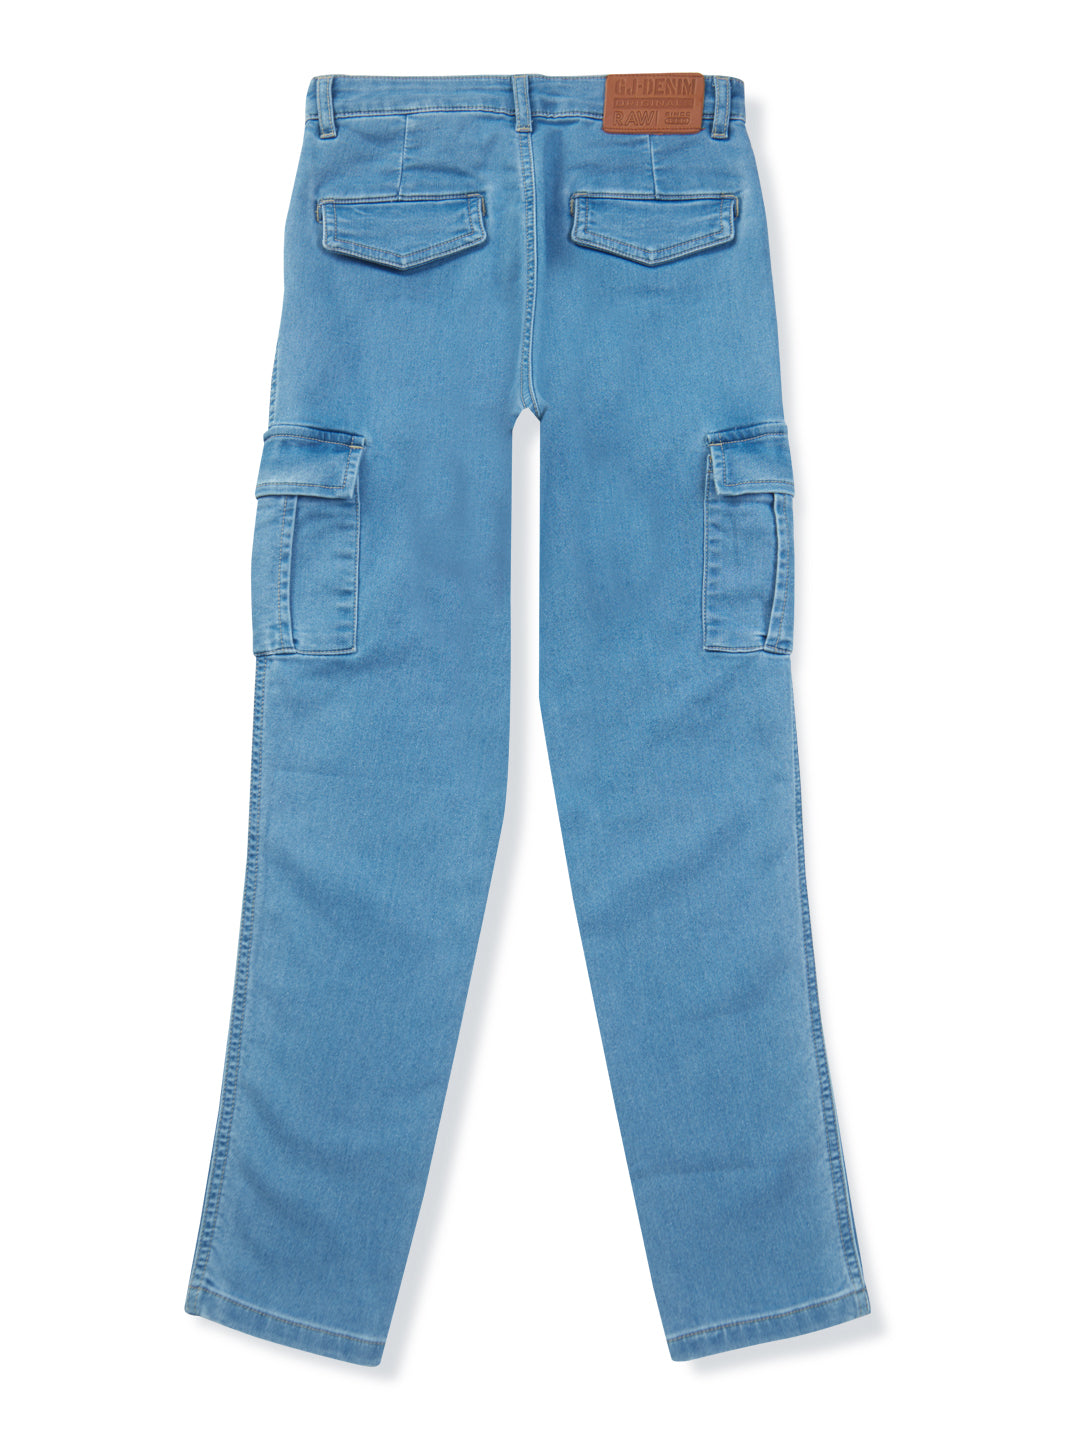 Boys Blue Solid Denim Jeans